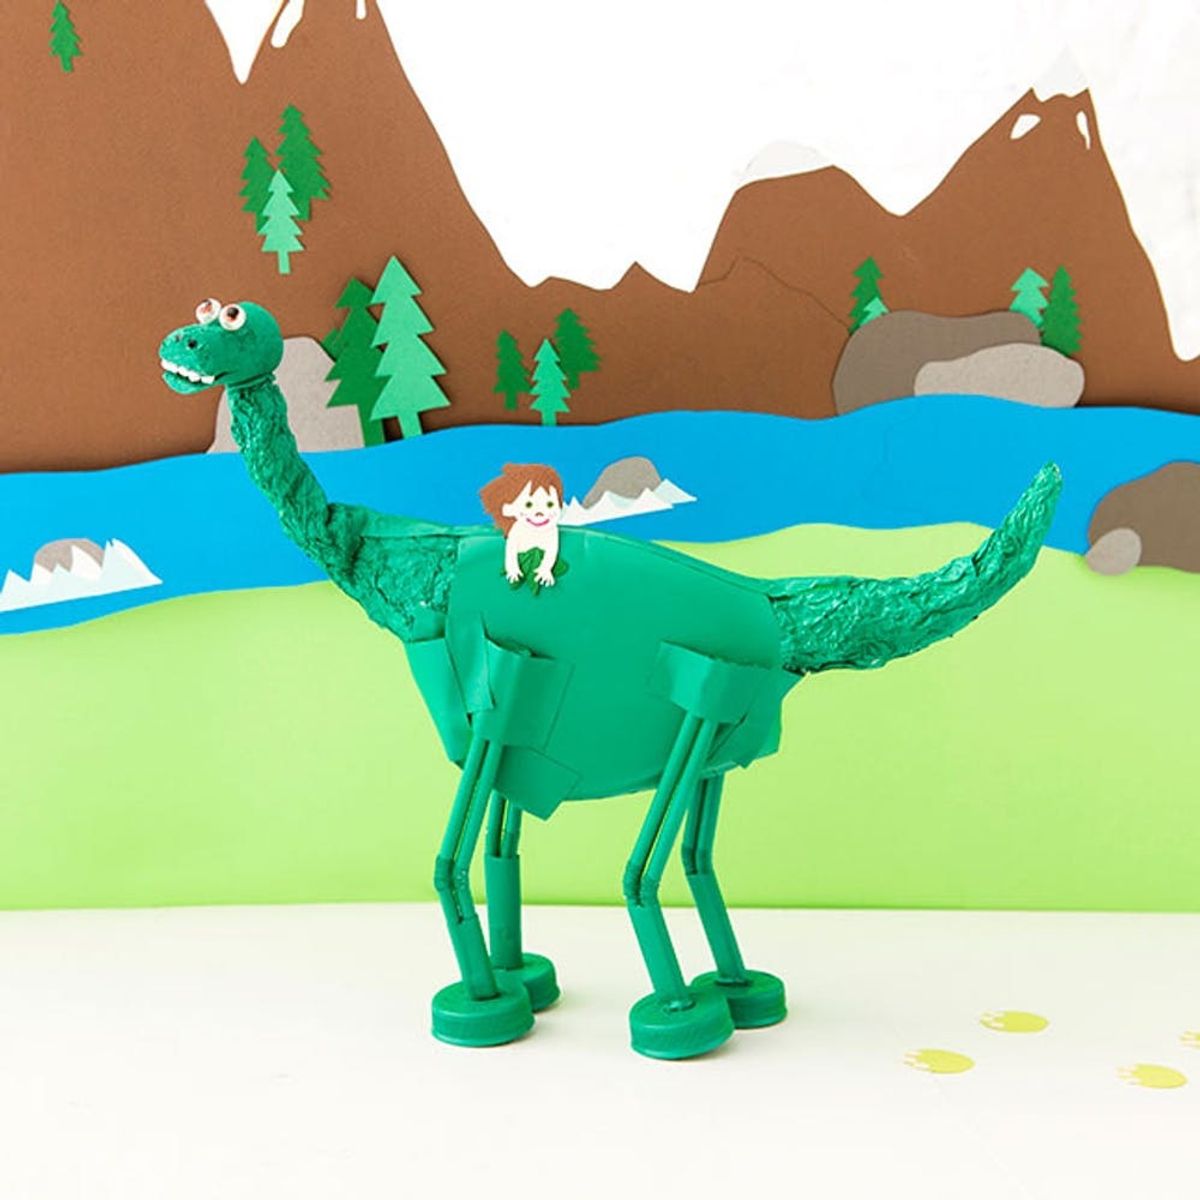 A DIY Good Dinosaur Arlo Toy Your Kids Will Love